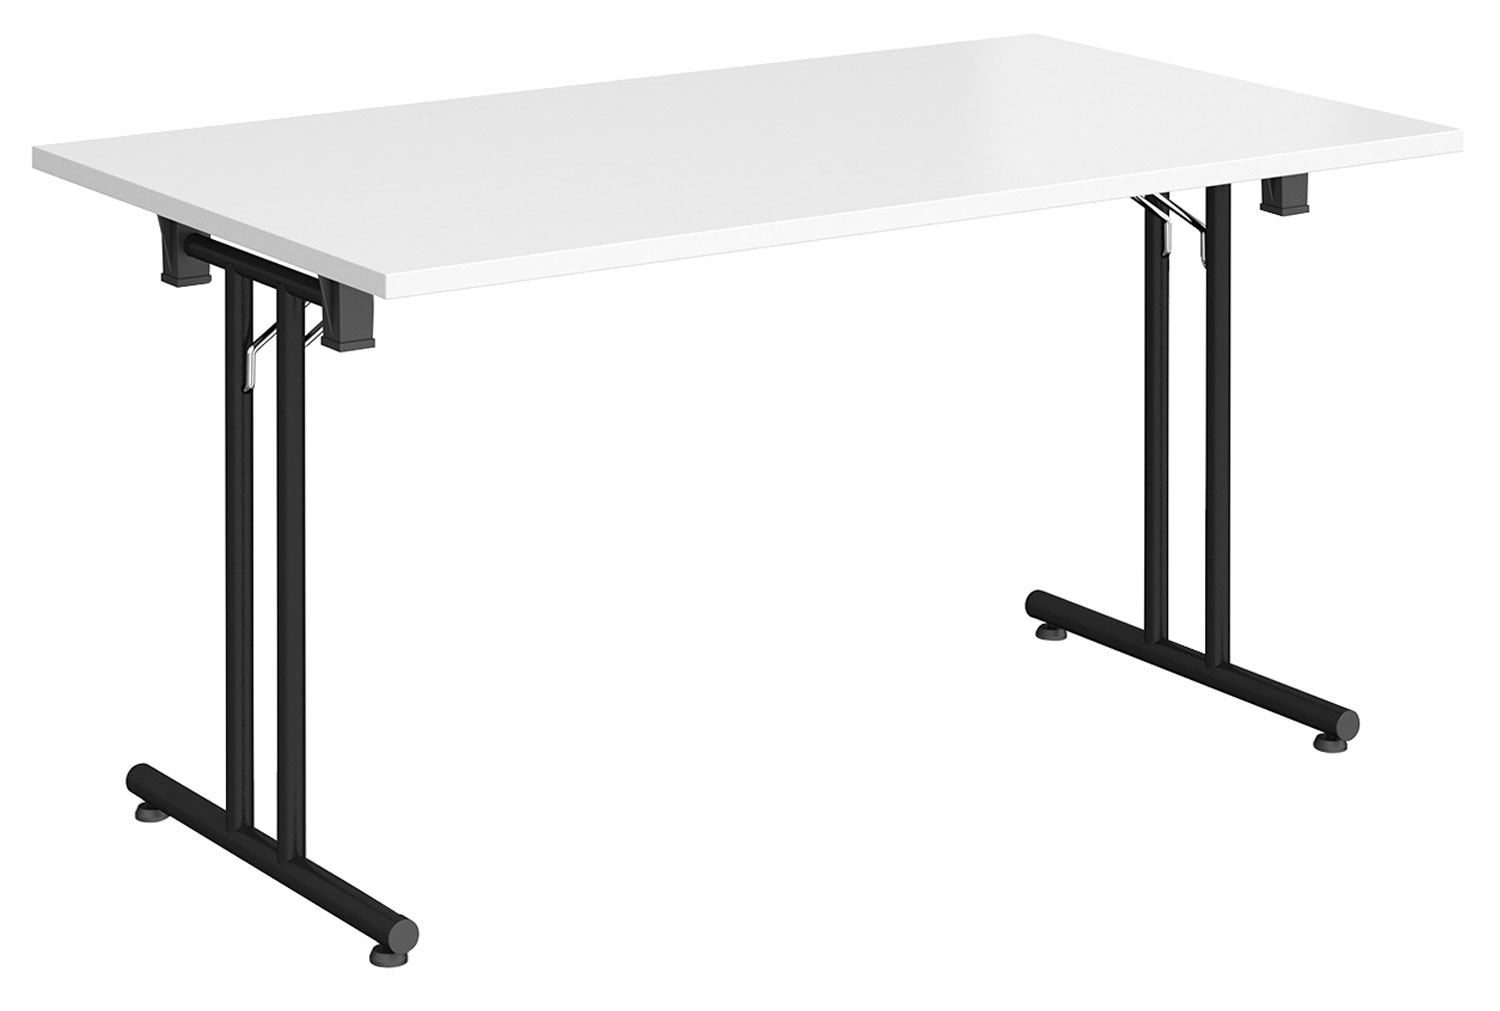 Ziegler Rectangular Folding Table, 140wx80dx73h (cm), White